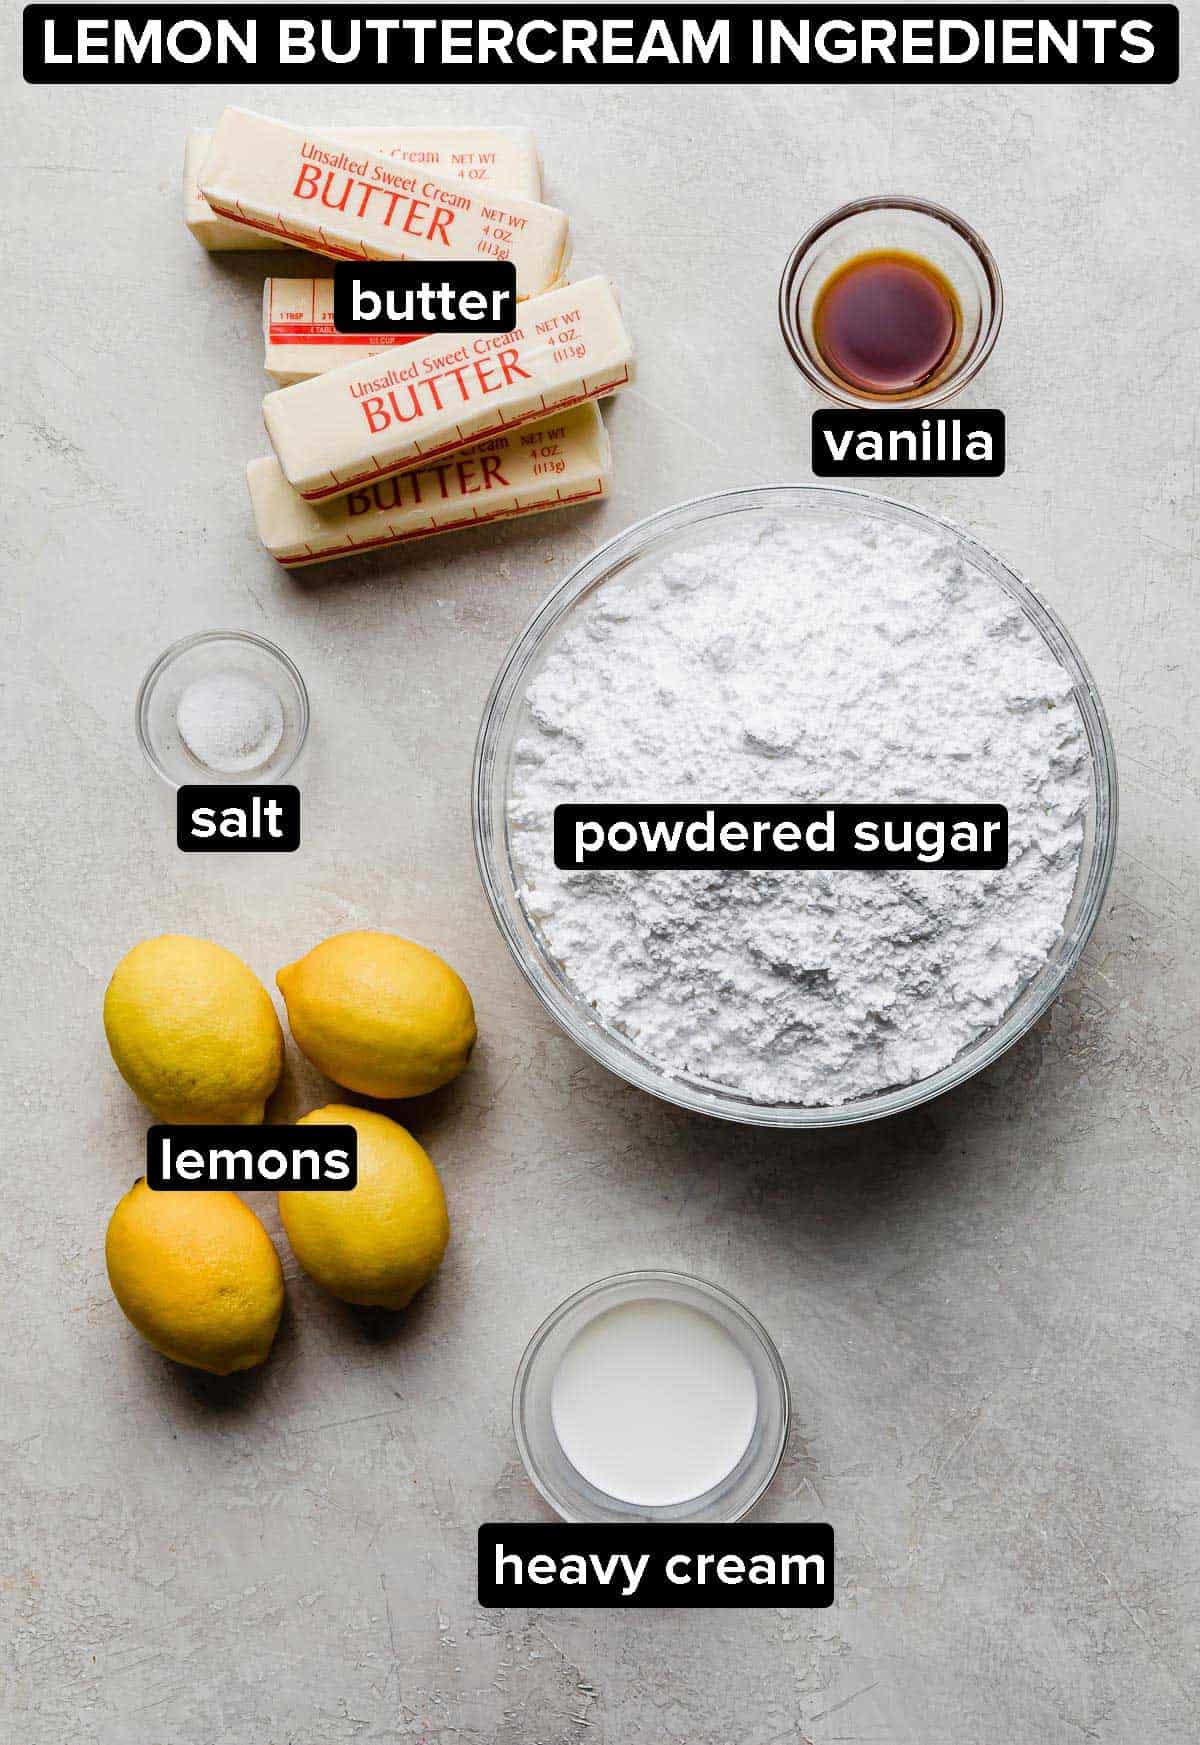 Lemon buttercream ingredients on a light grey background.